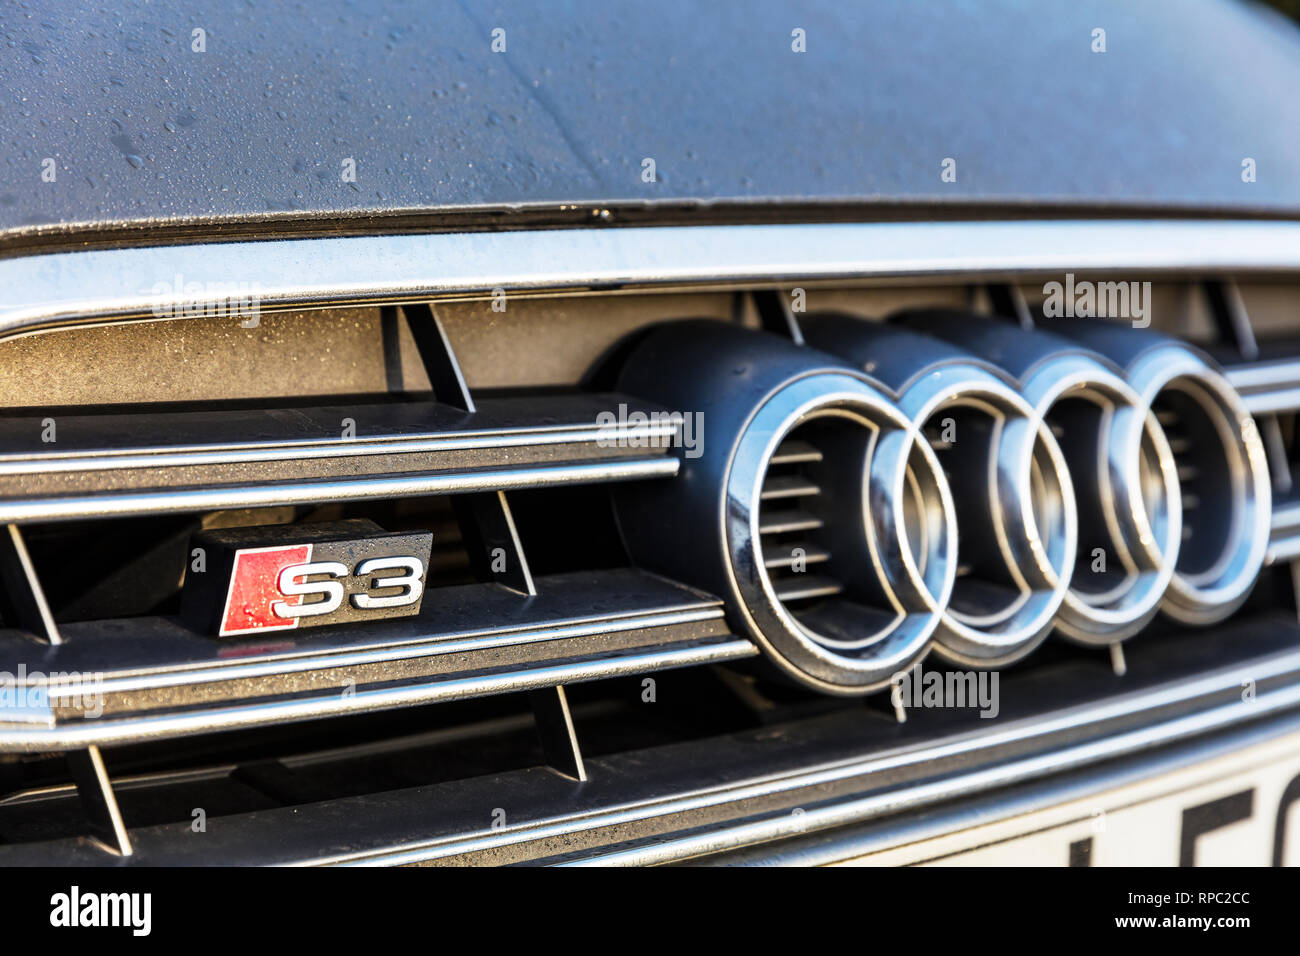 Audi S3, Audi S3, Audi, Audi, Audi Sport Auto, S 3 Abzeichen, Audi Logo, S3, Audi S3, Audi, Audi S3 Frontgrill, Audi, Auto, Autos, Stockfoto